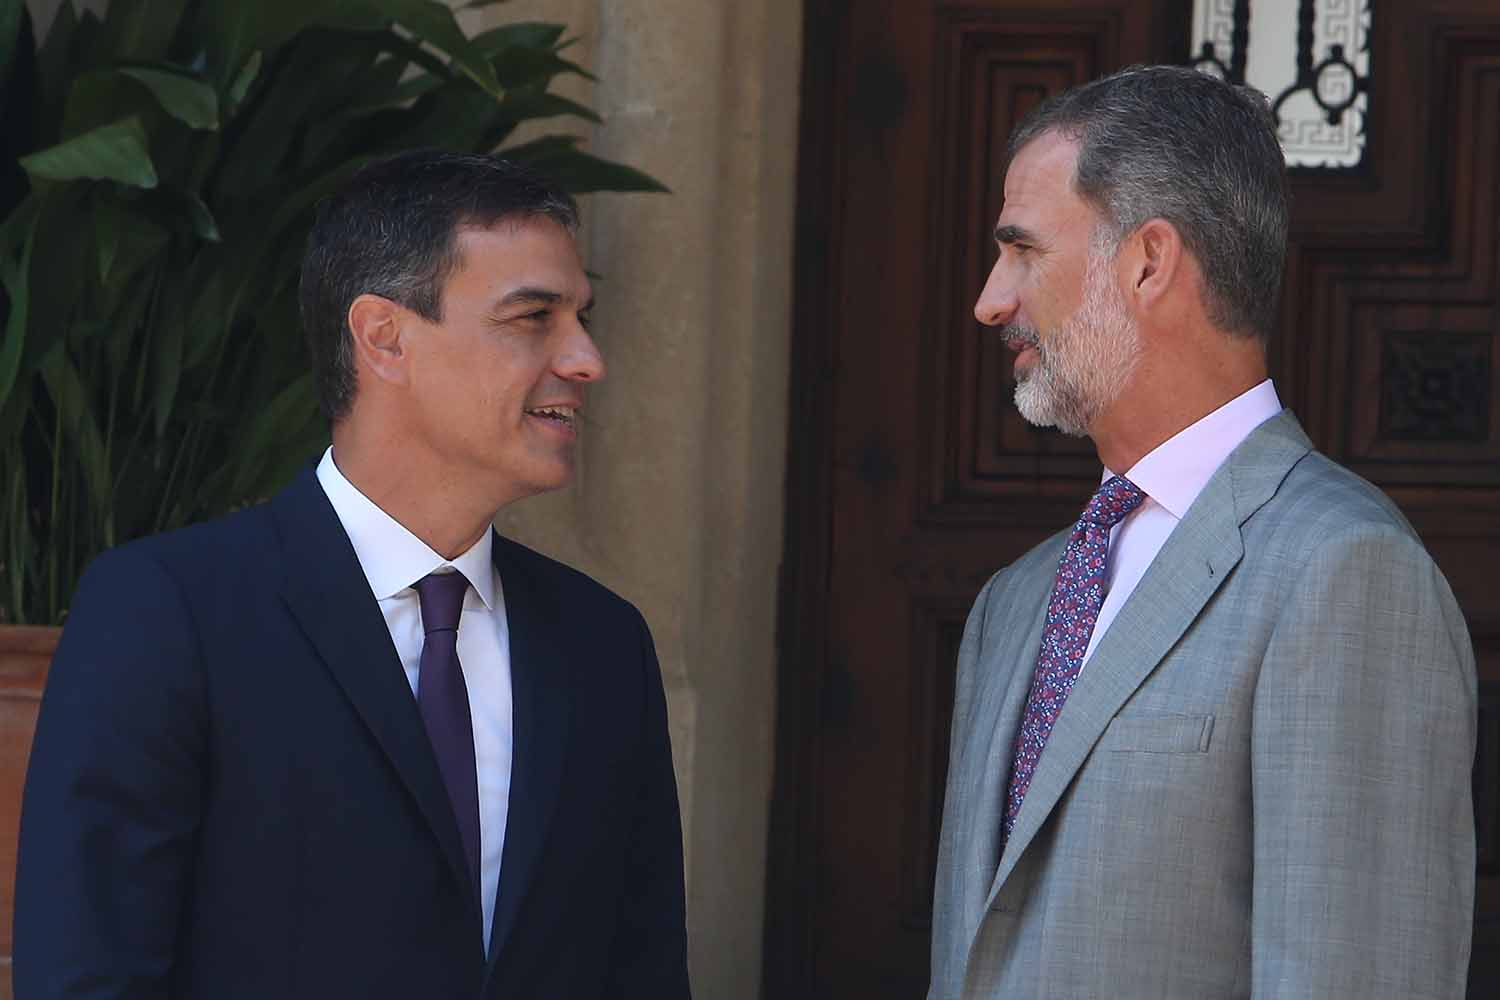 El president del govern espanyol, Pedro Sánchez, amb el rei Felip VI, en una imatge d'arxiu /Rafa Garrido